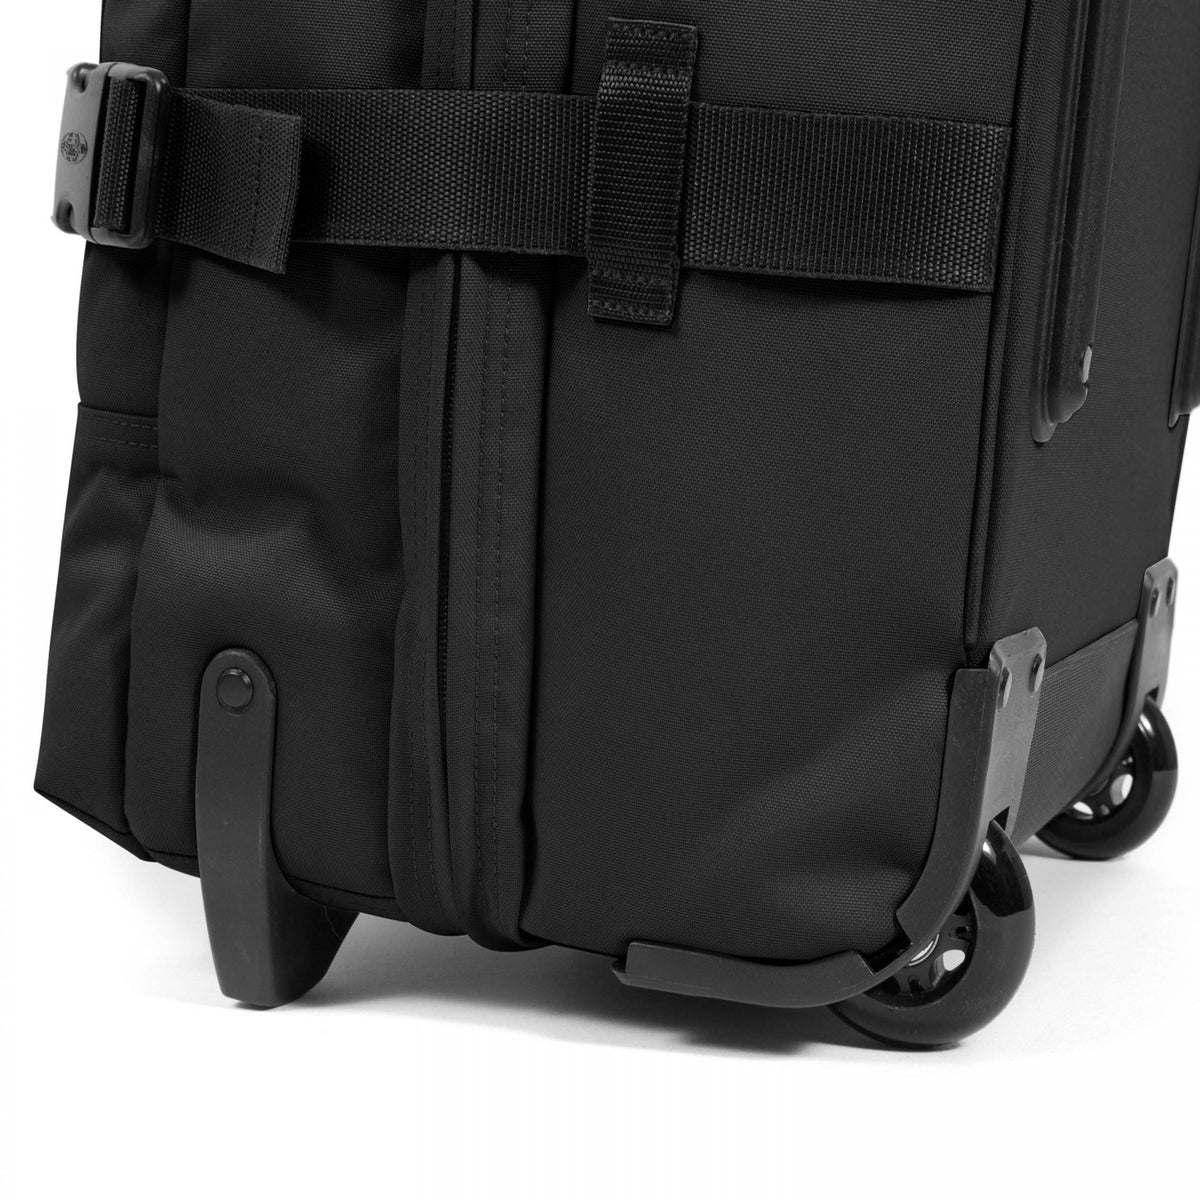 Eastpak Tranverz L Suitcase - Black